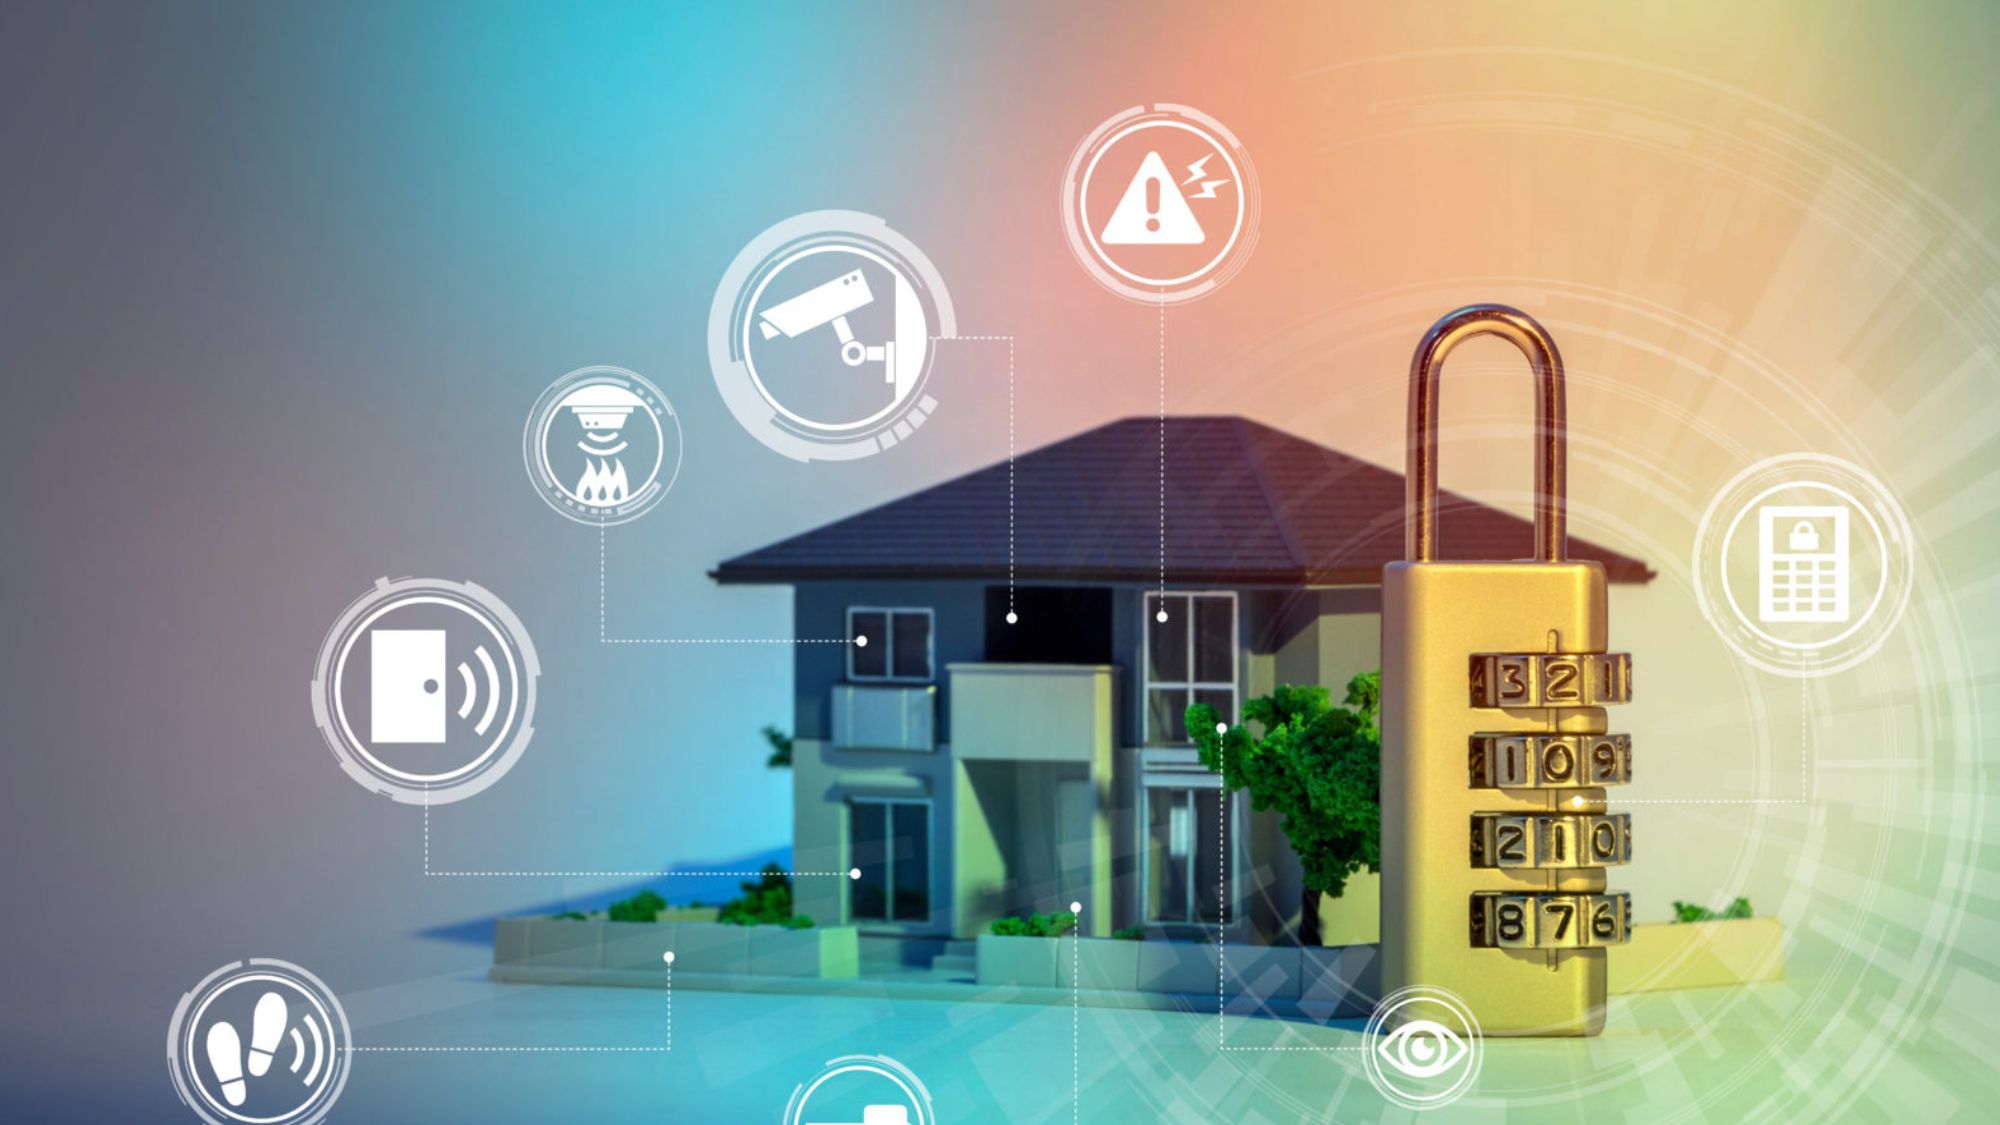 A digital house symbolizing latest technologies on premises safety